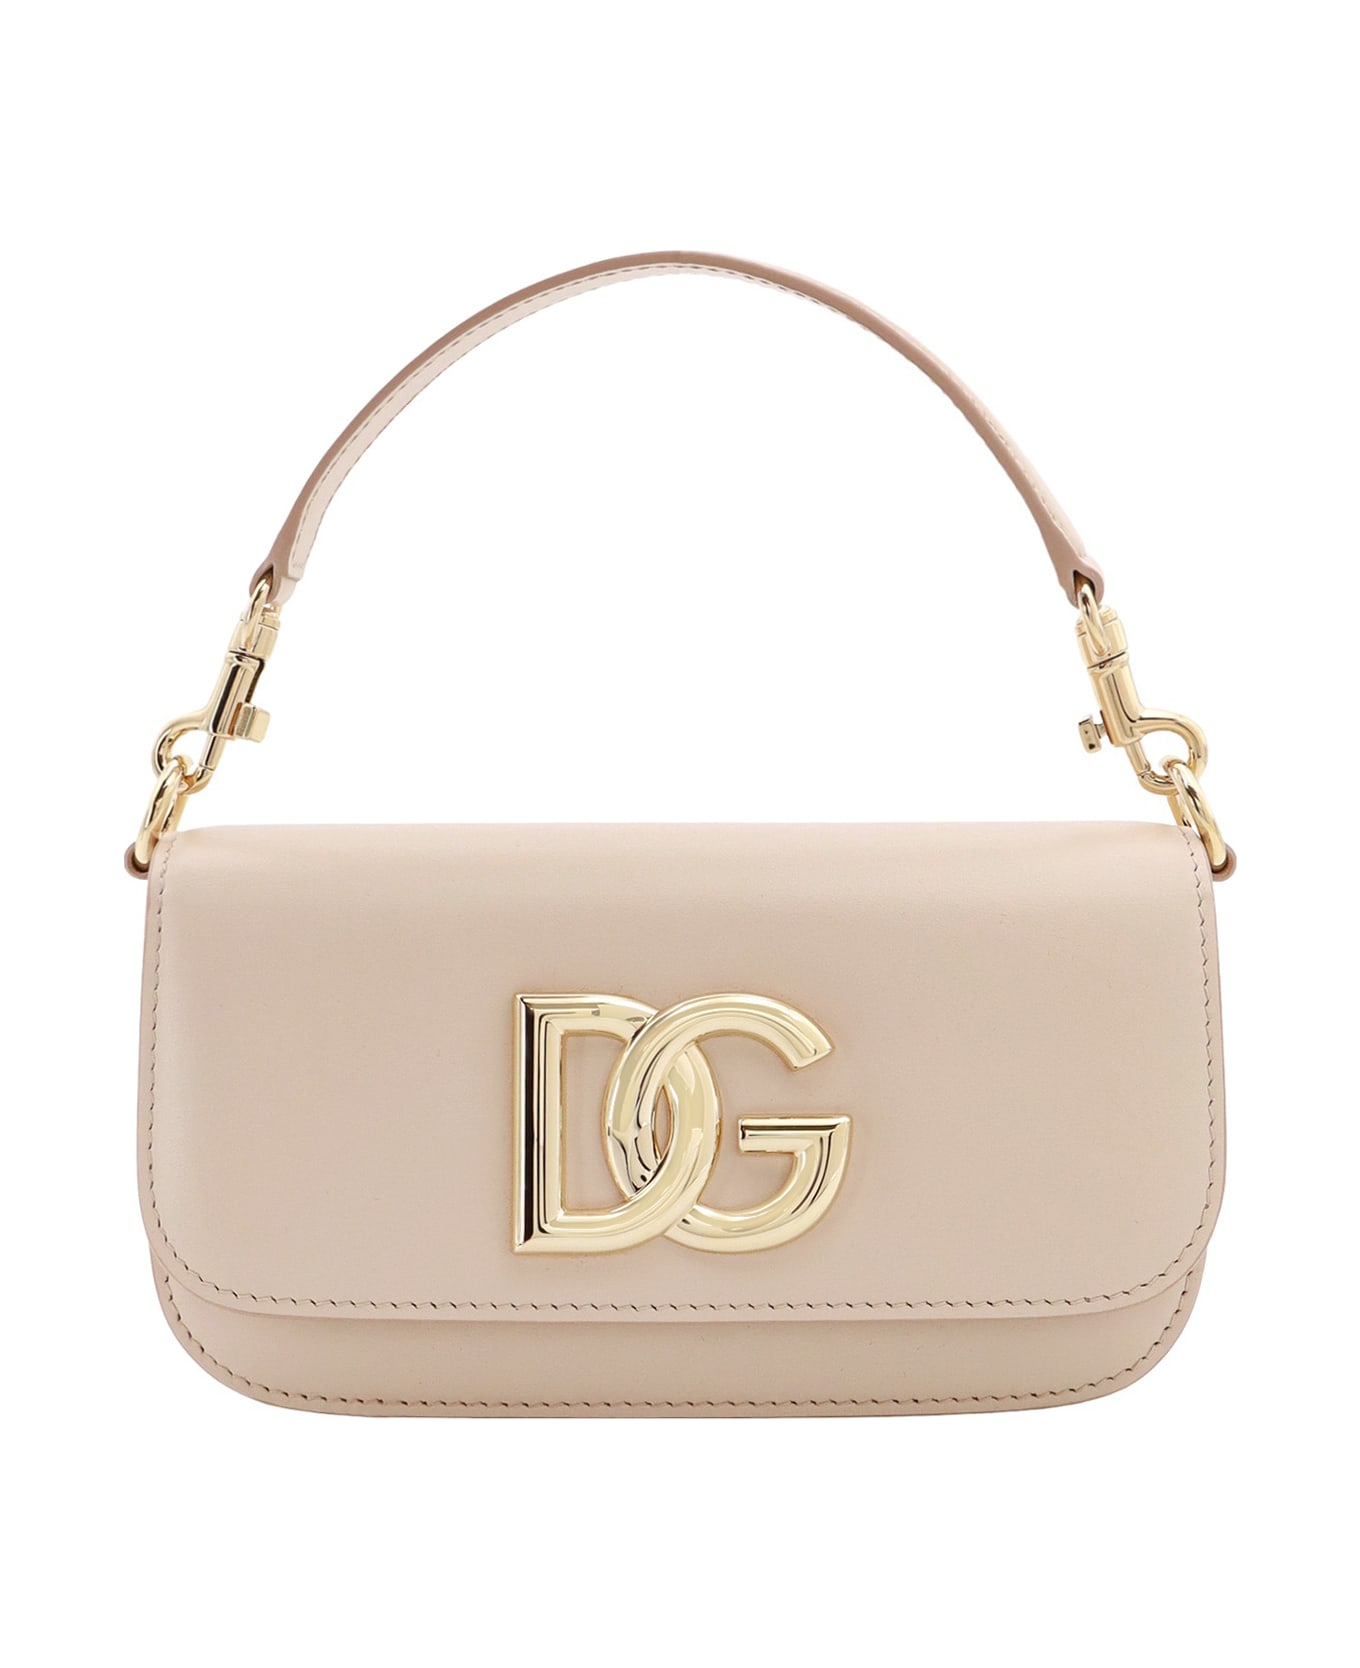 Dolce & Gabbana Leather Bag - Beige